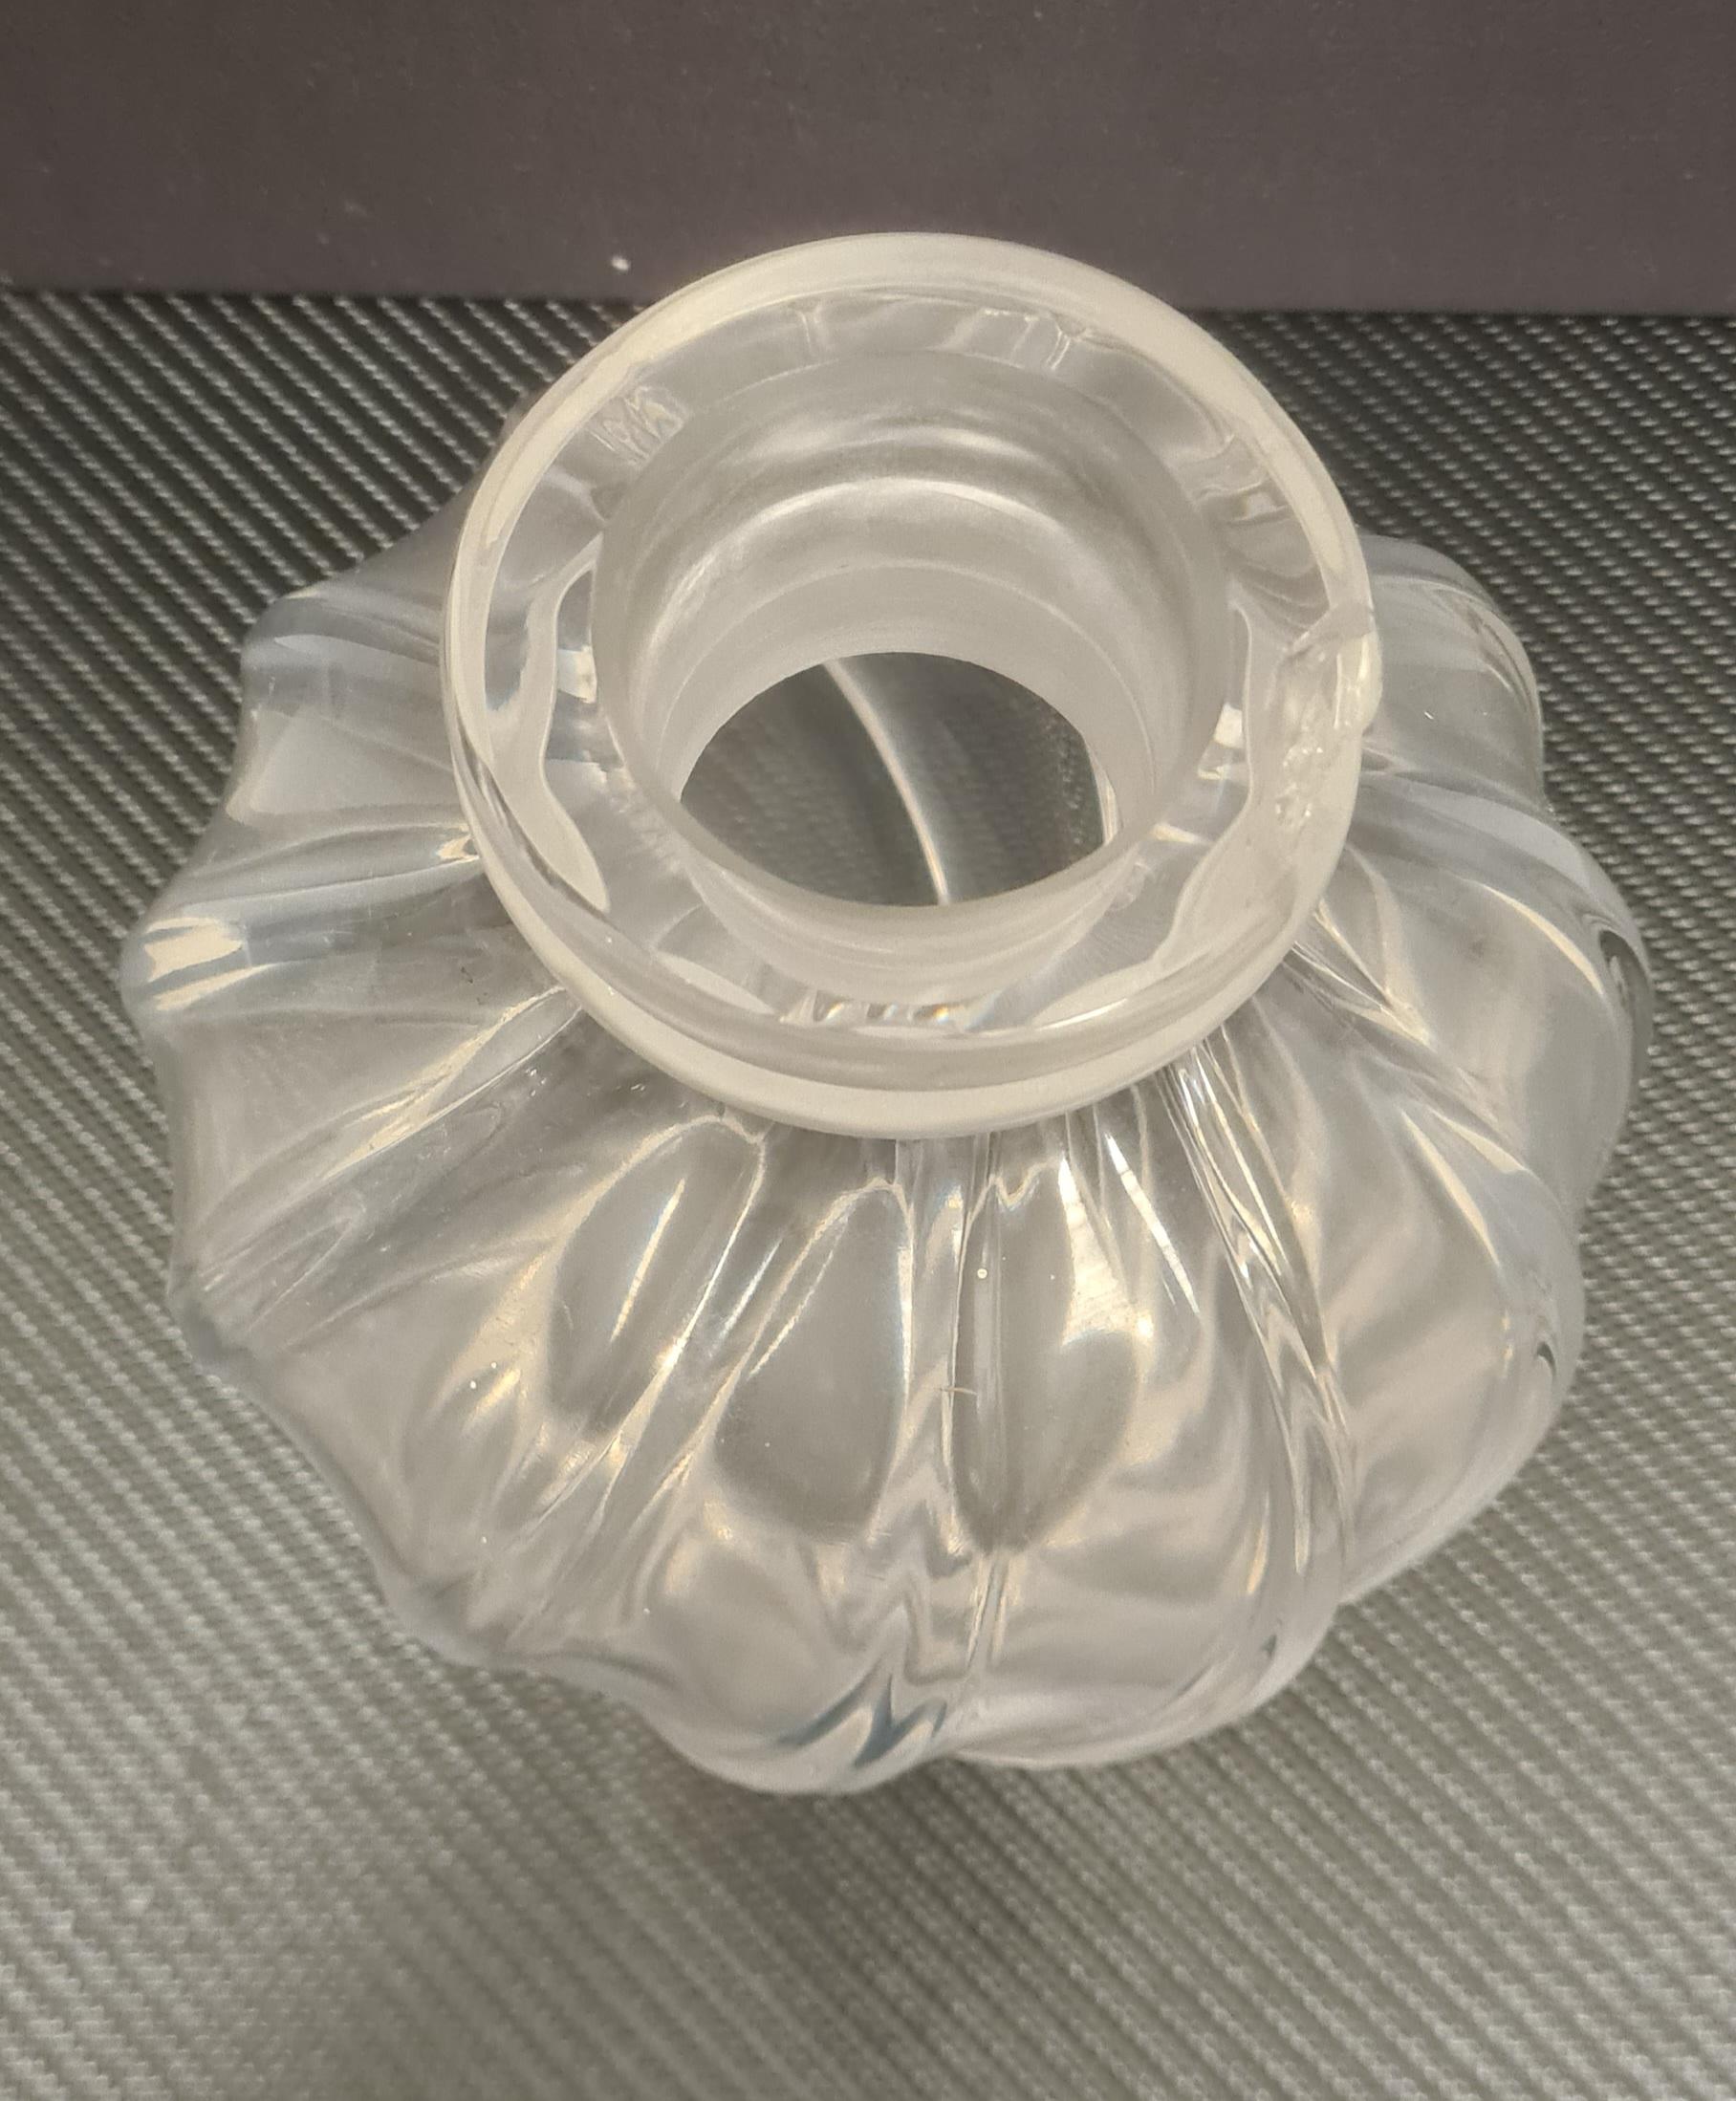 Large collectible Lalique glass bottle of the perfume L'air du temps For Sale 3